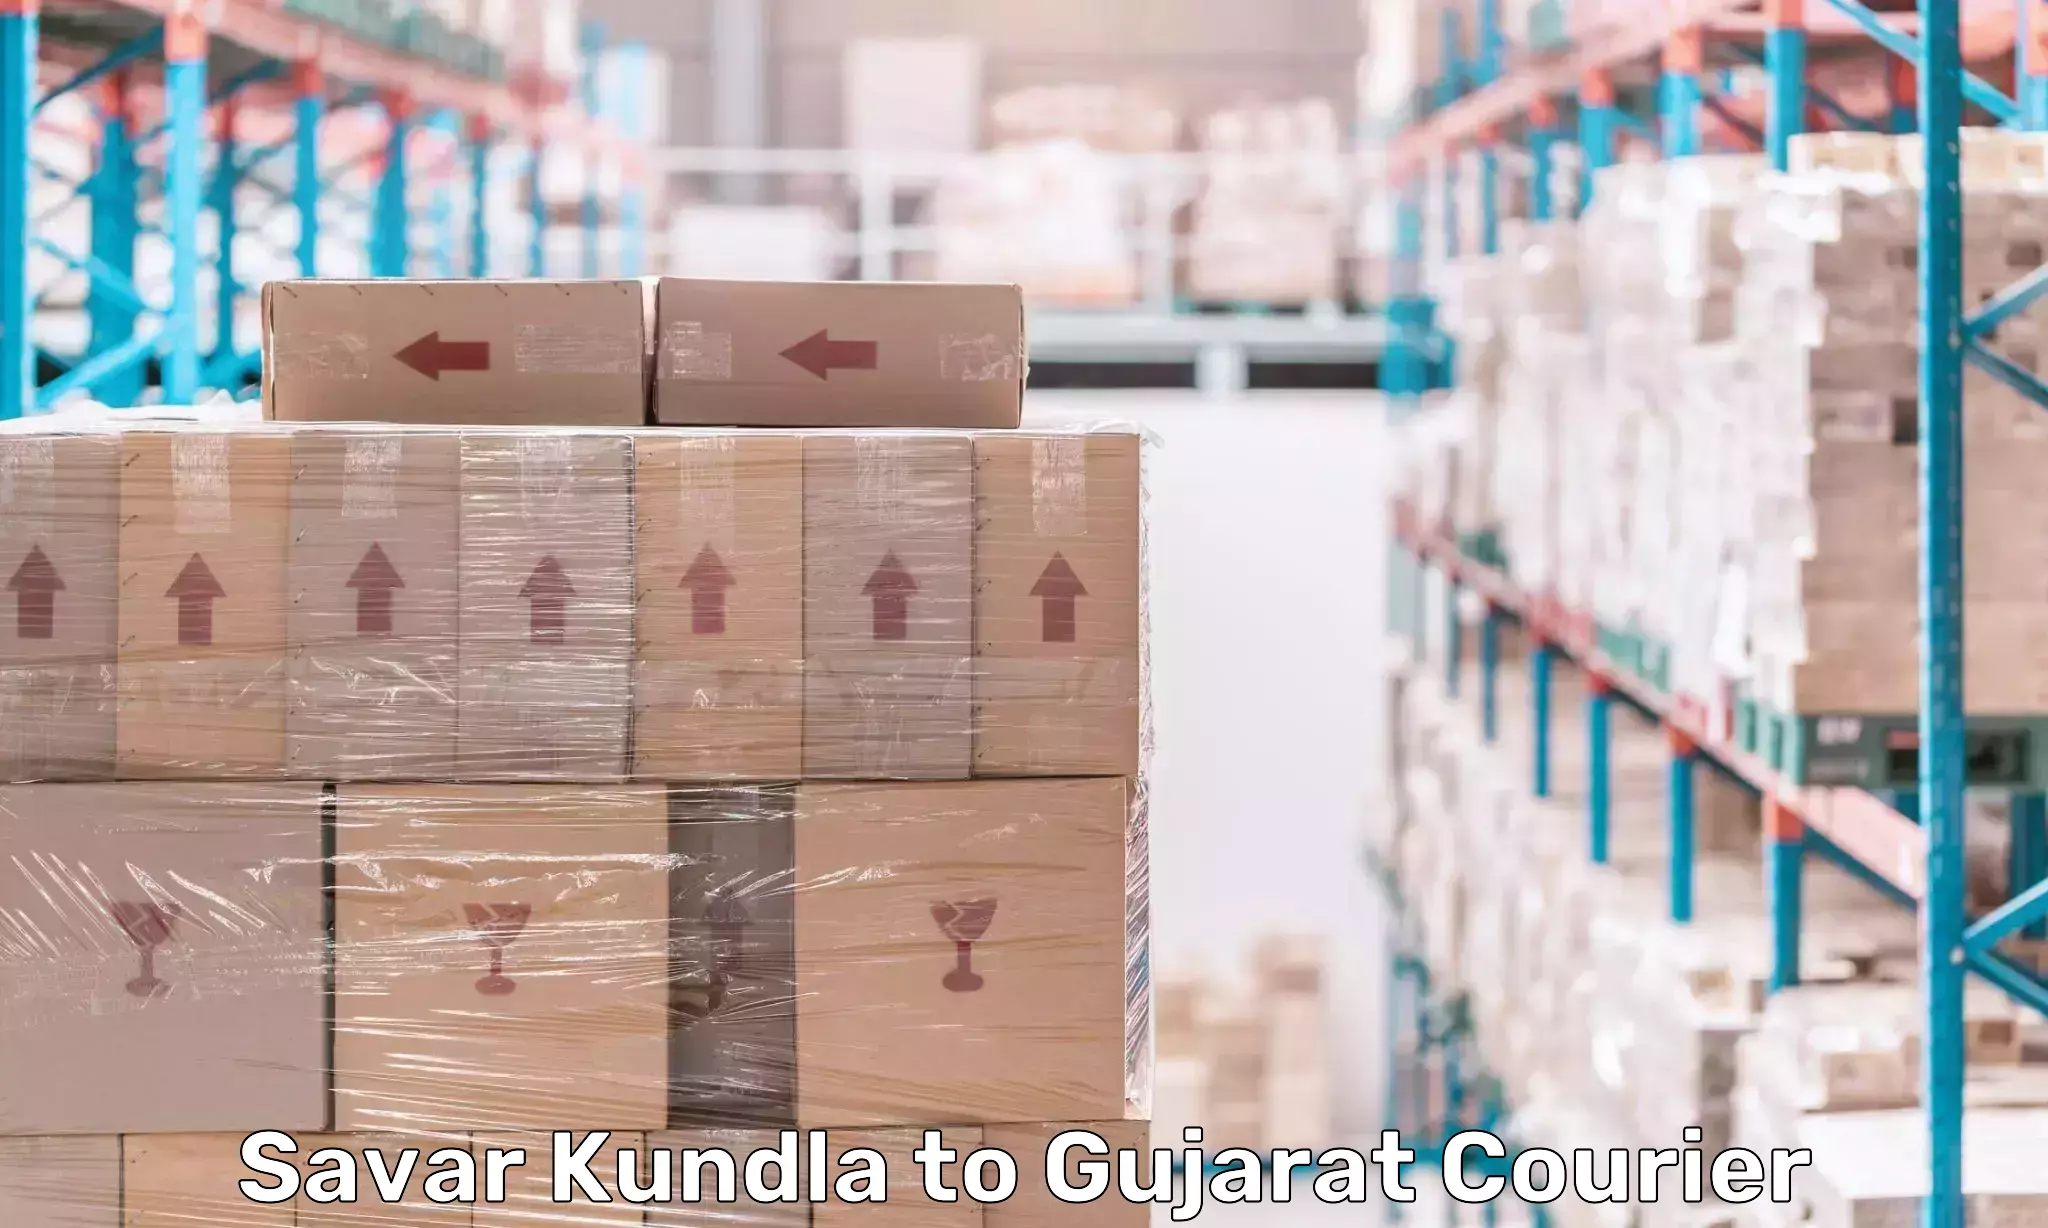 24/7 courier service Savar Kundla to Patan Gujarat